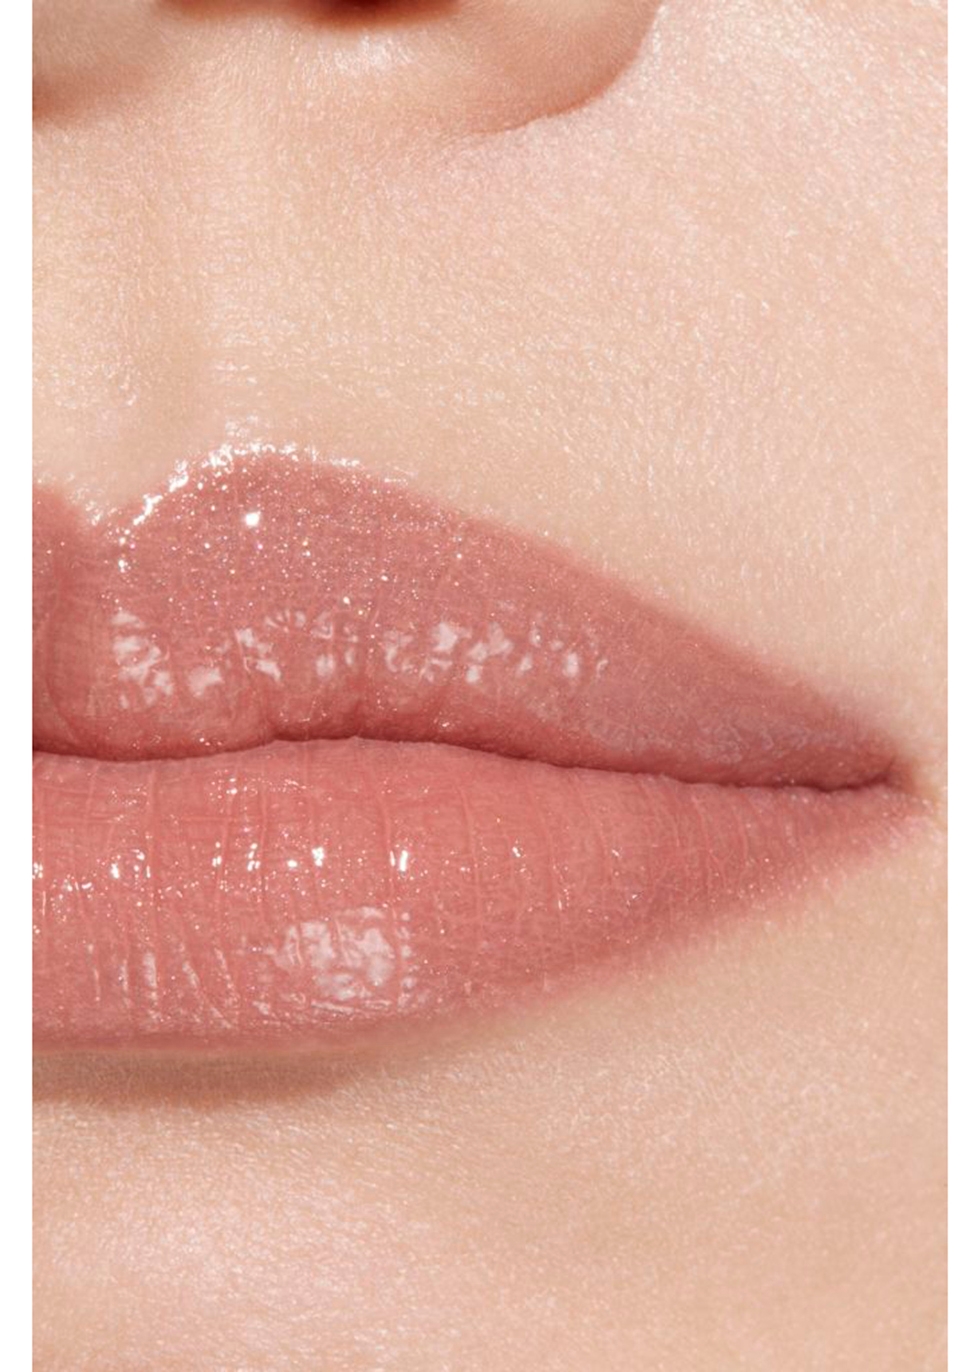 Chanel Collection Méditerannée Summer 2015 Rouge Coco Shines Intrépide  Amorosa Rêveuse  The Beauty Look Book